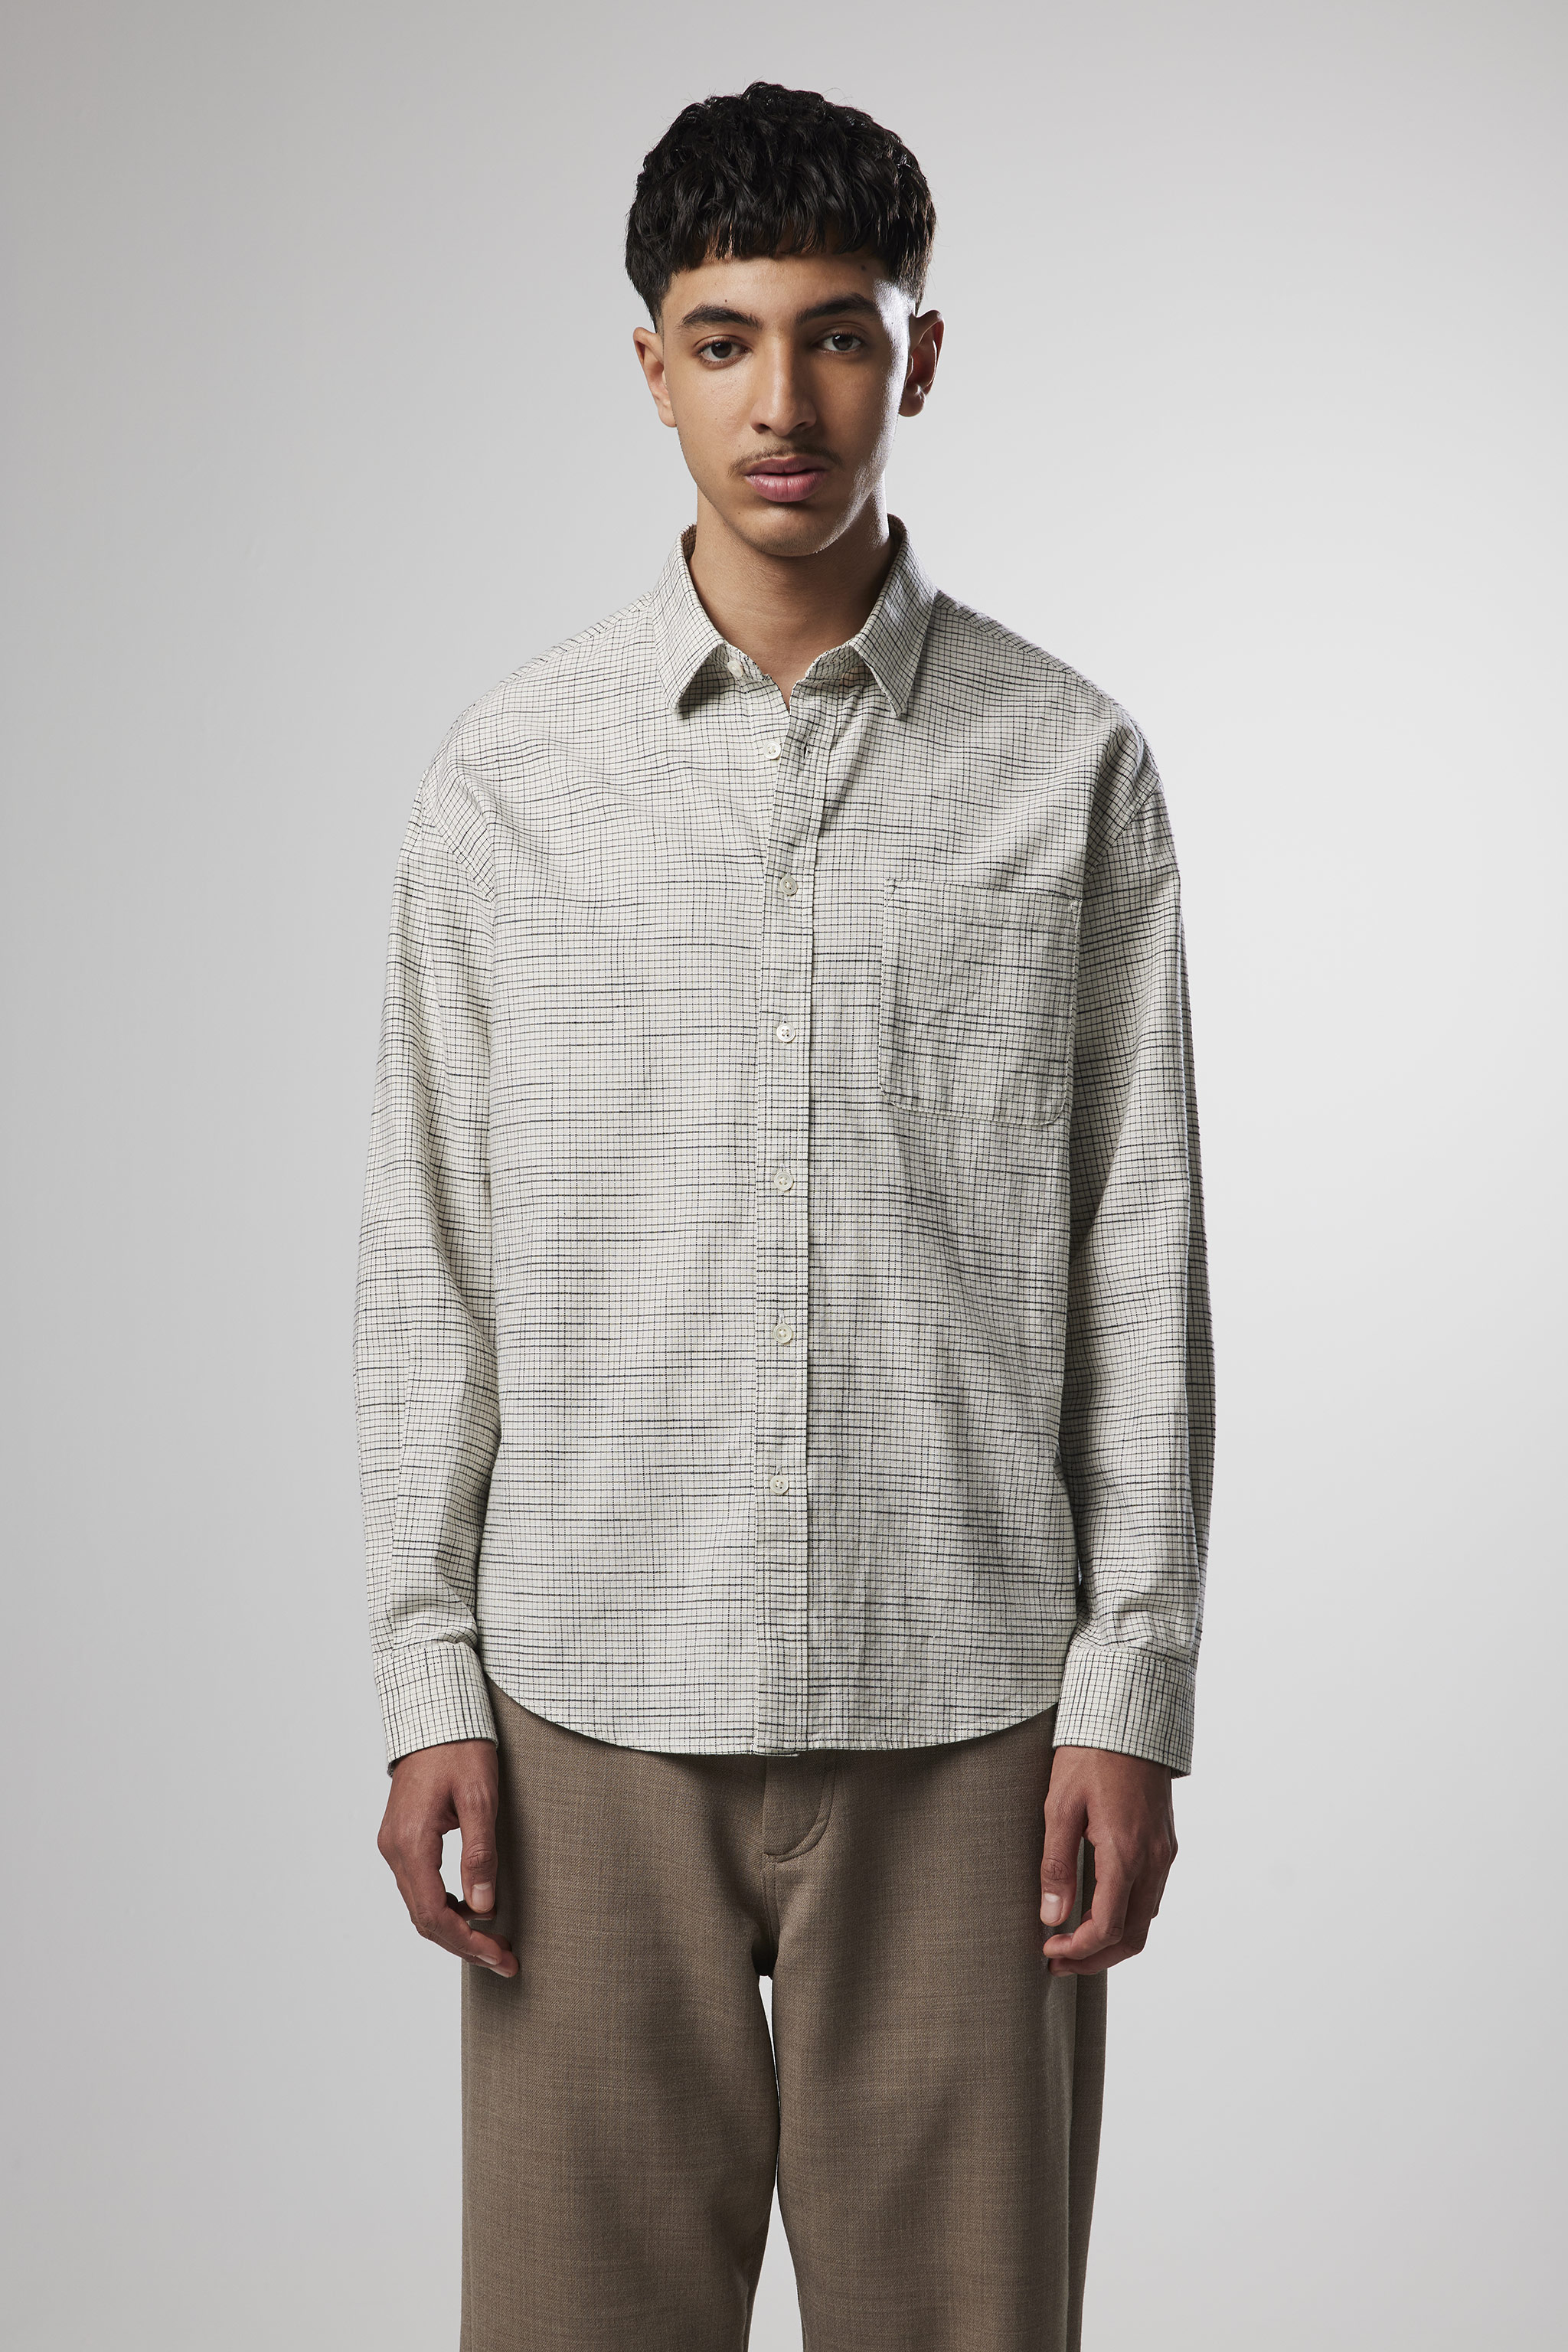 Deon 5235 men's shirt - Multi Check - Buy online at NN.07®